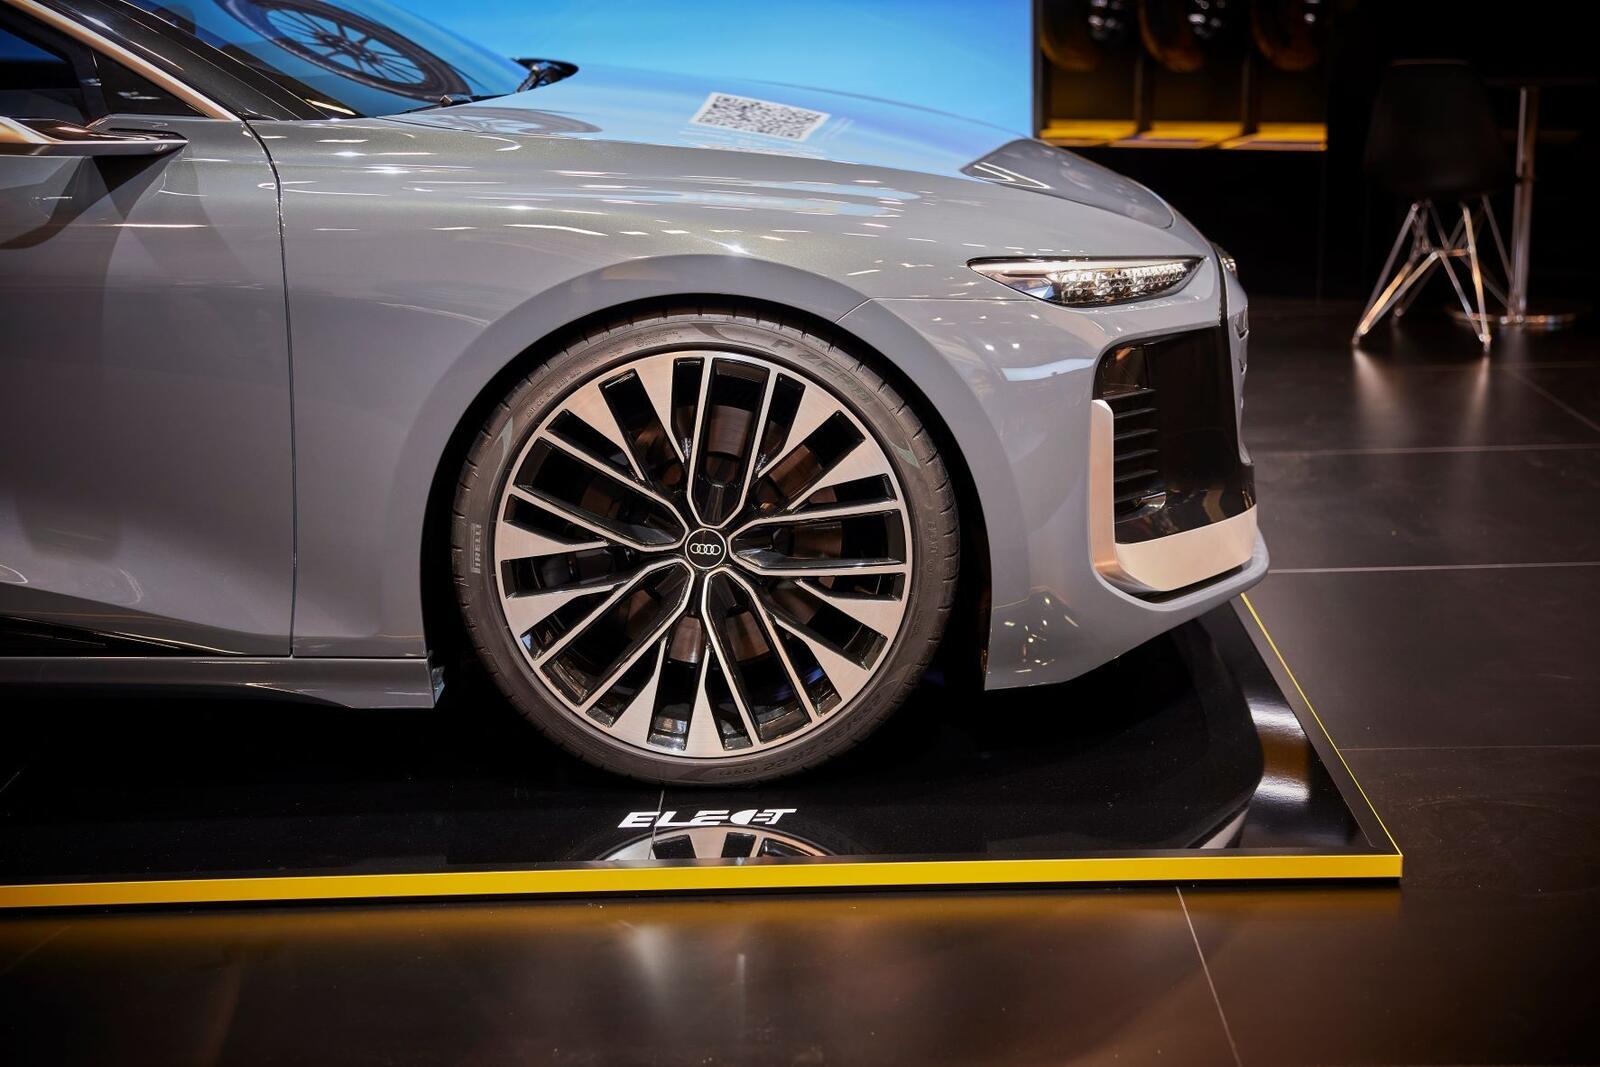 Den Audi A6 Avant e-tron concept zeigte Pirelli mit seiner Elect-Technologie bereift am Messestand.